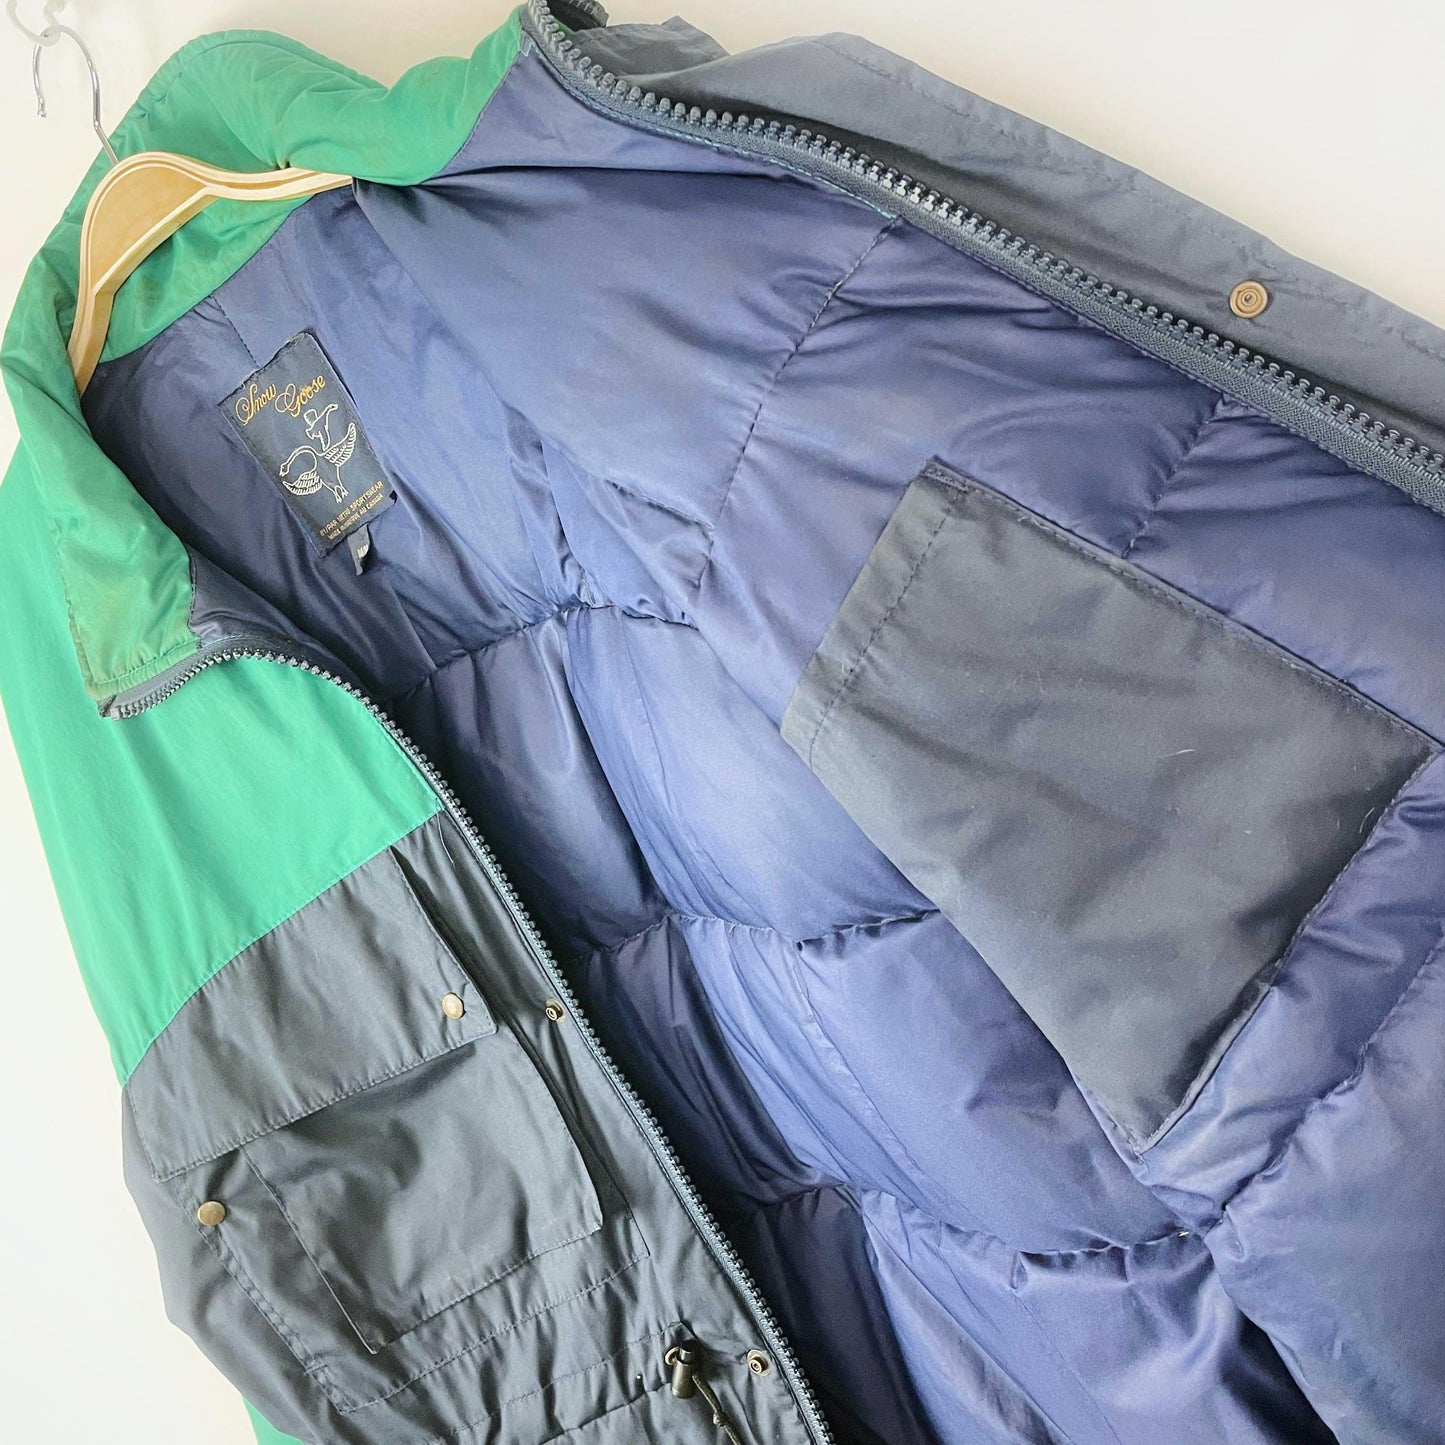 vintage 90s snow goose puffer jacket - size medium